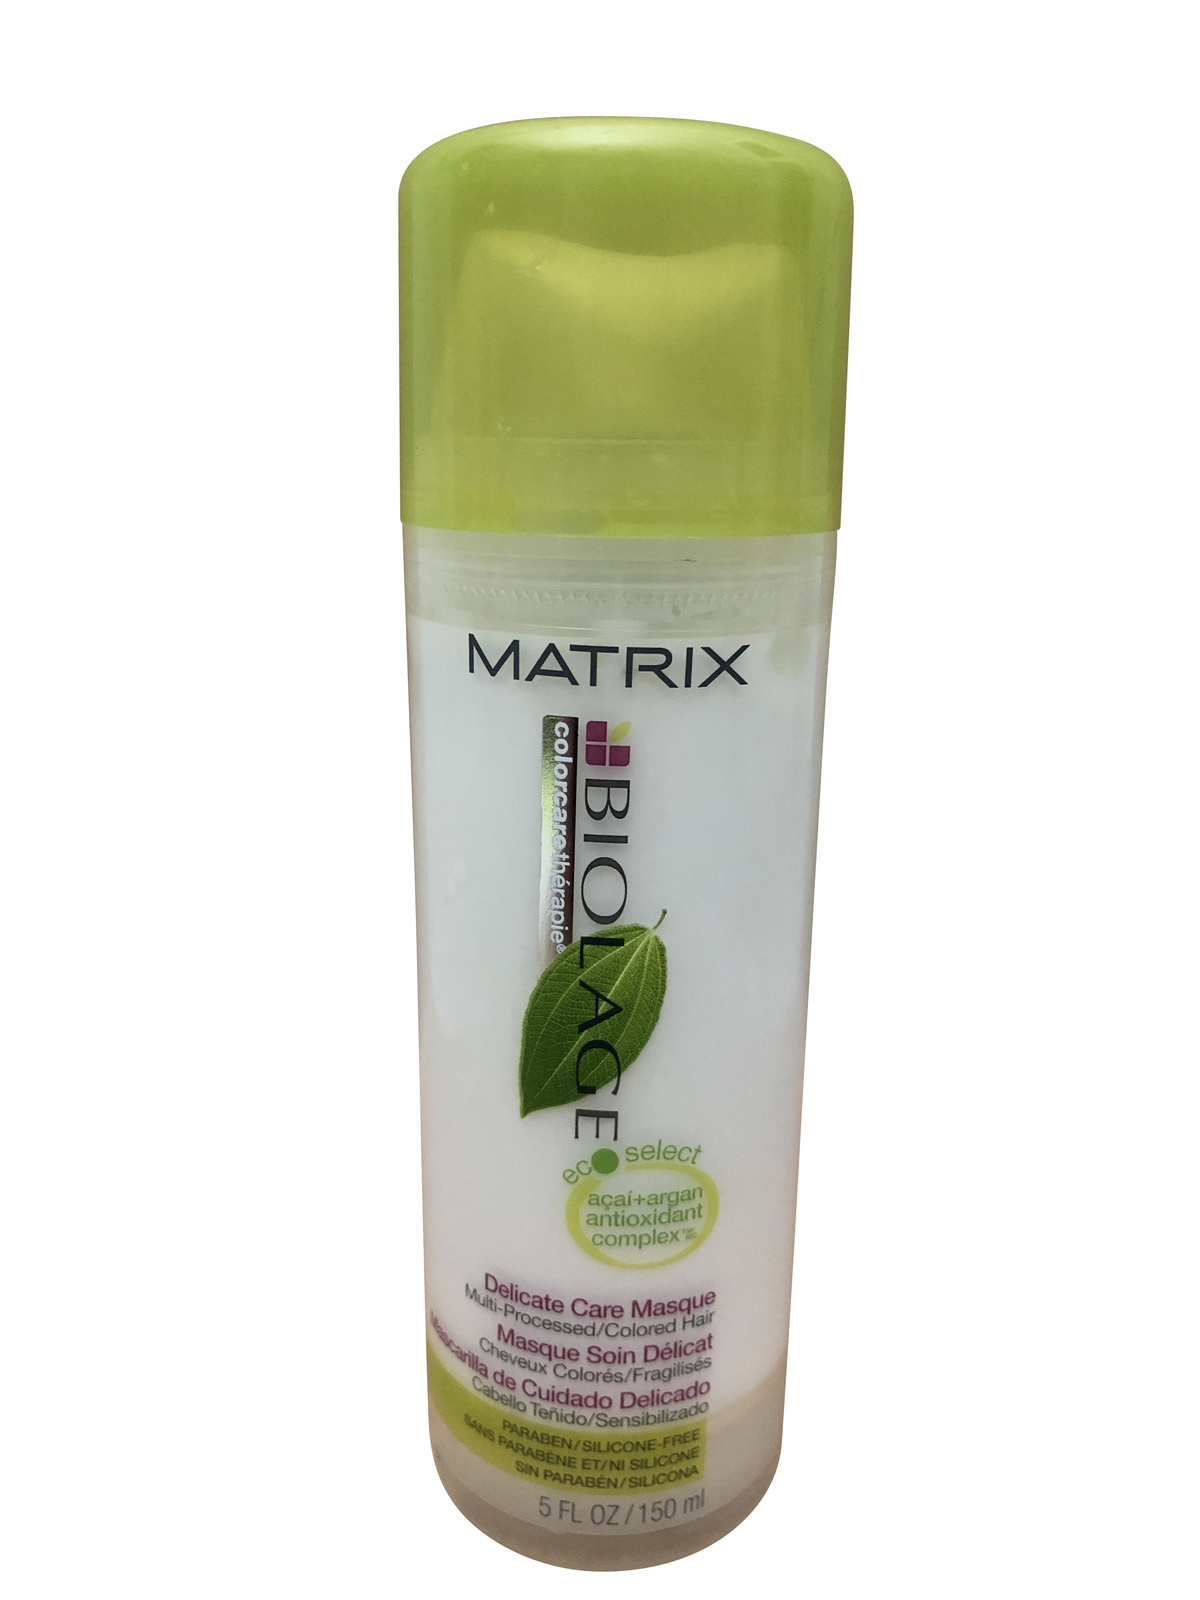 Matrix Biolage Delicate Care Masque Color Treated Hair - $9.18